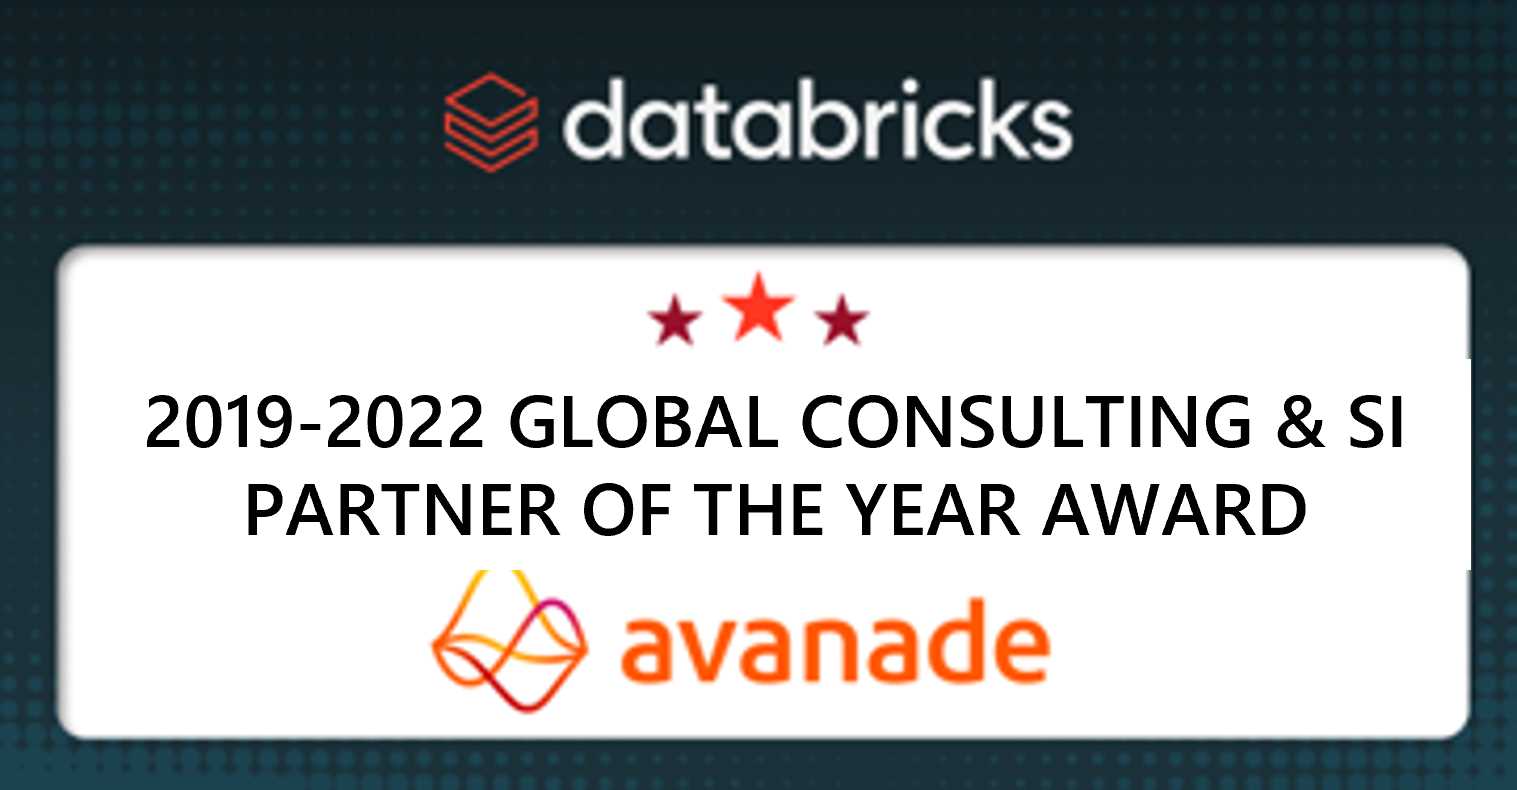 Partnership tra Avanade e Databricks